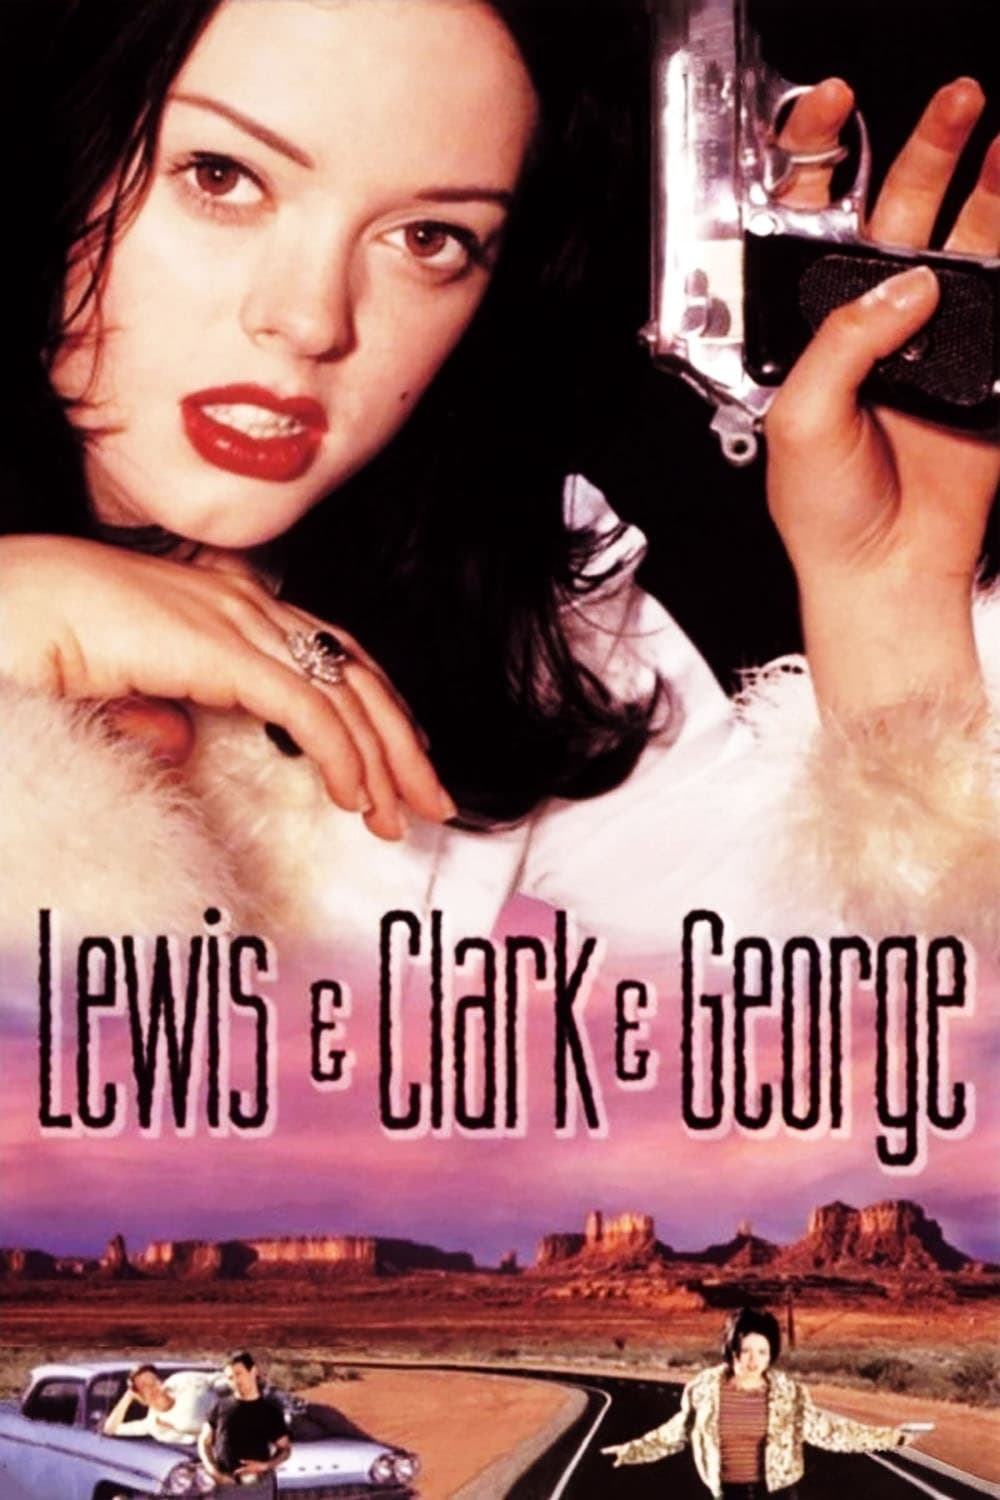 Lewis & Clark & George (1997)